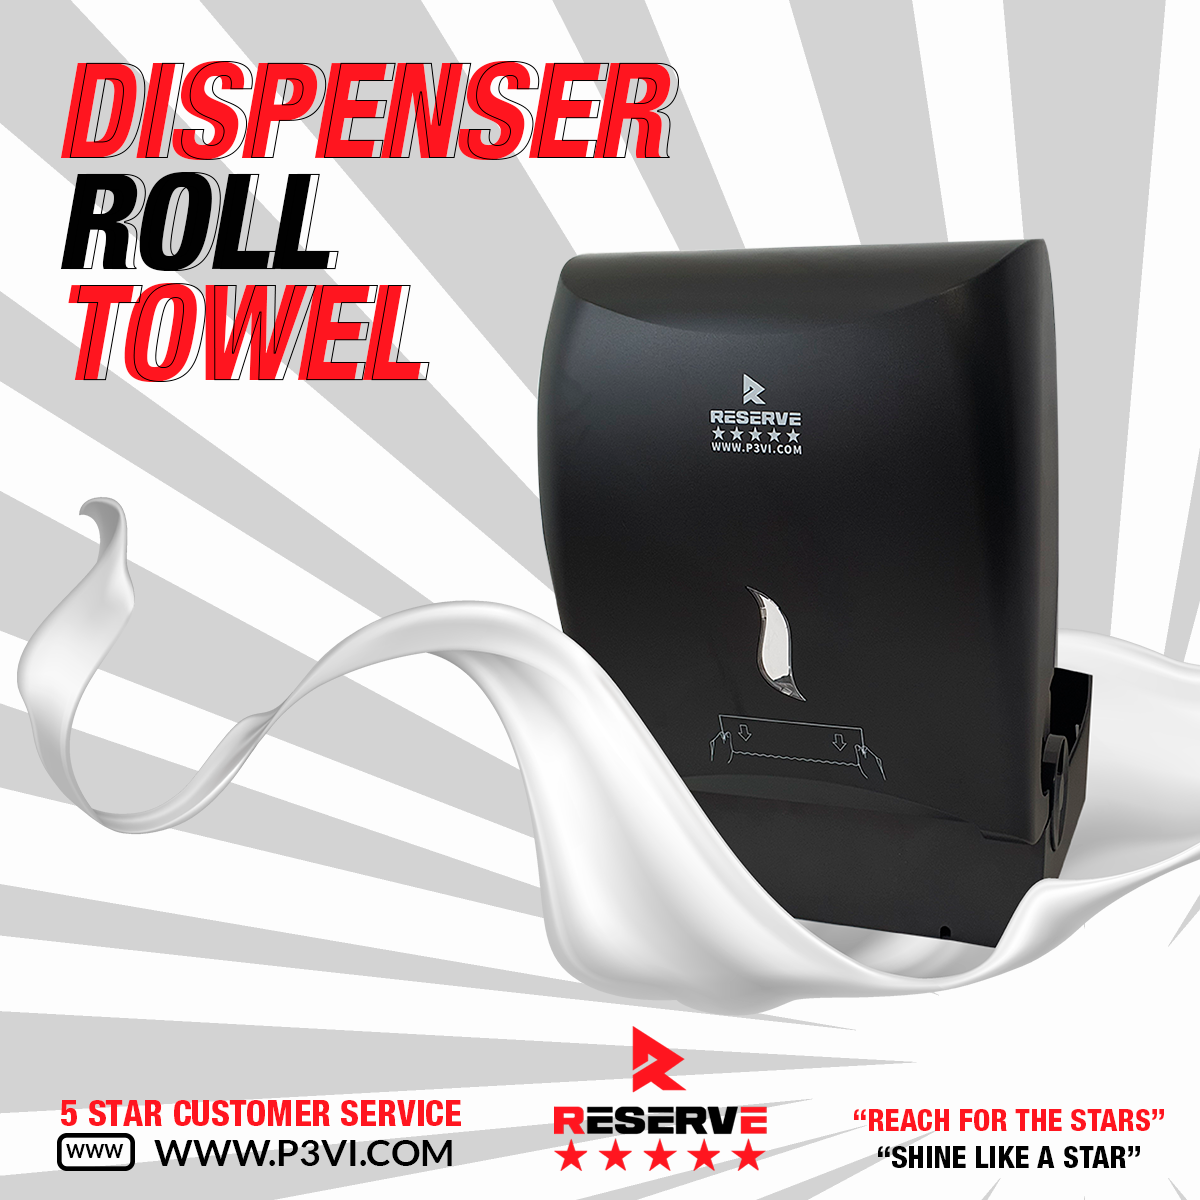 Dispenser Roll Towel Reserve